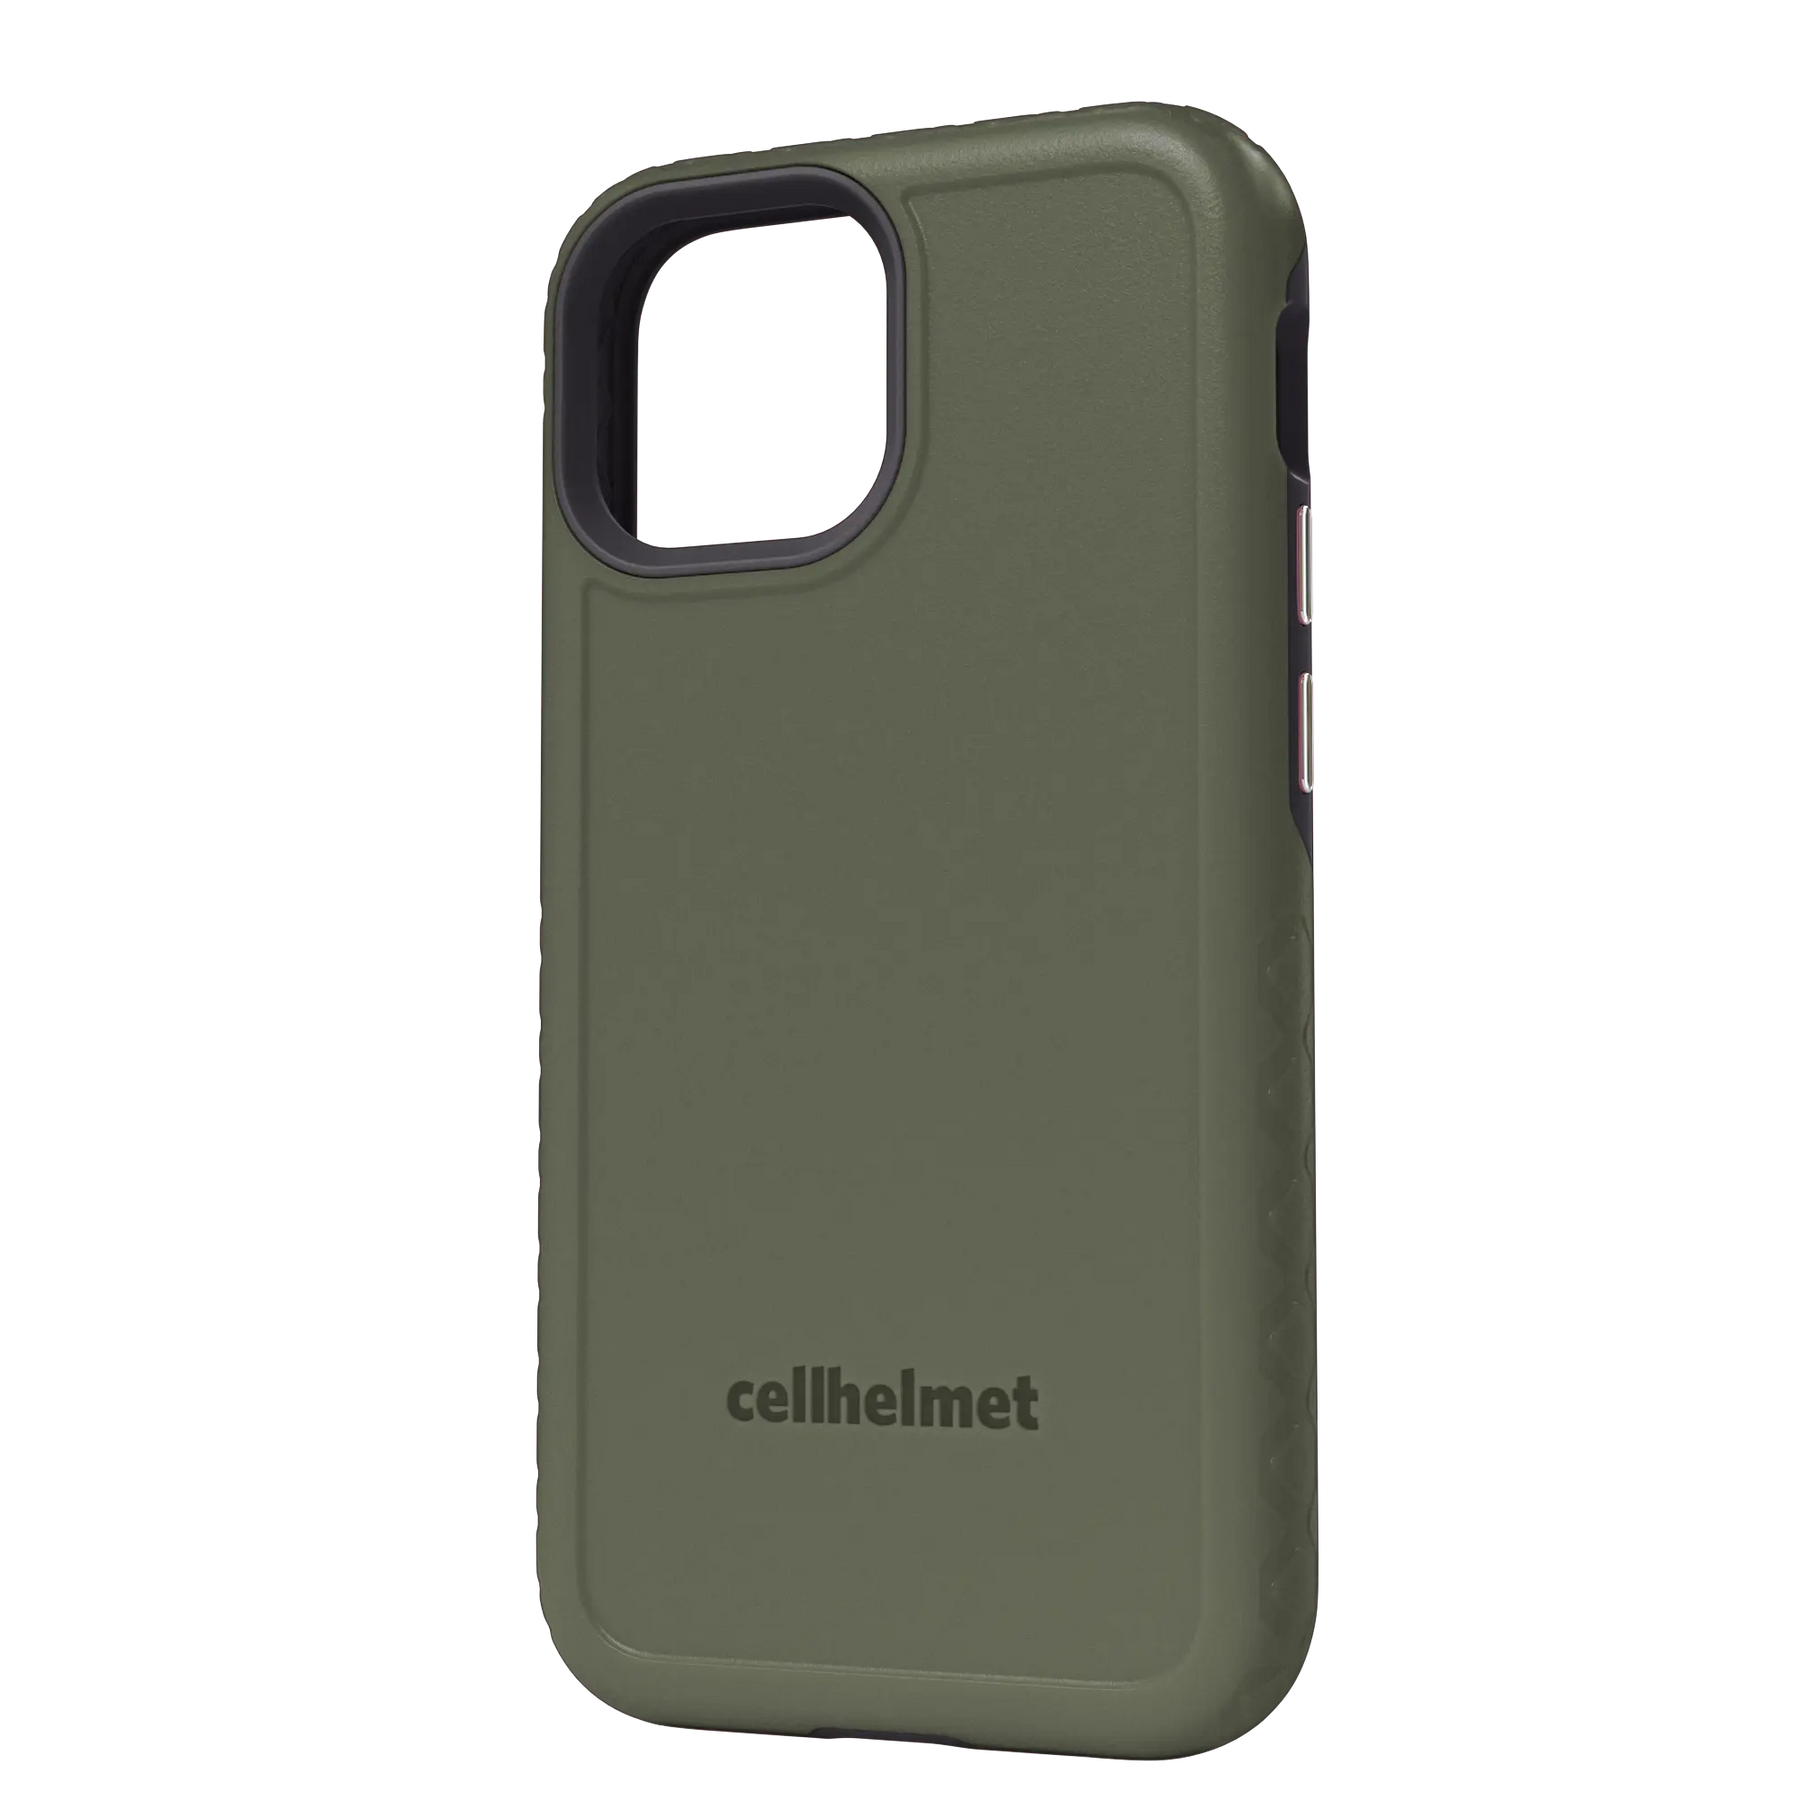 Green cellhelmet Customizable Case for iPhone 13 Mini